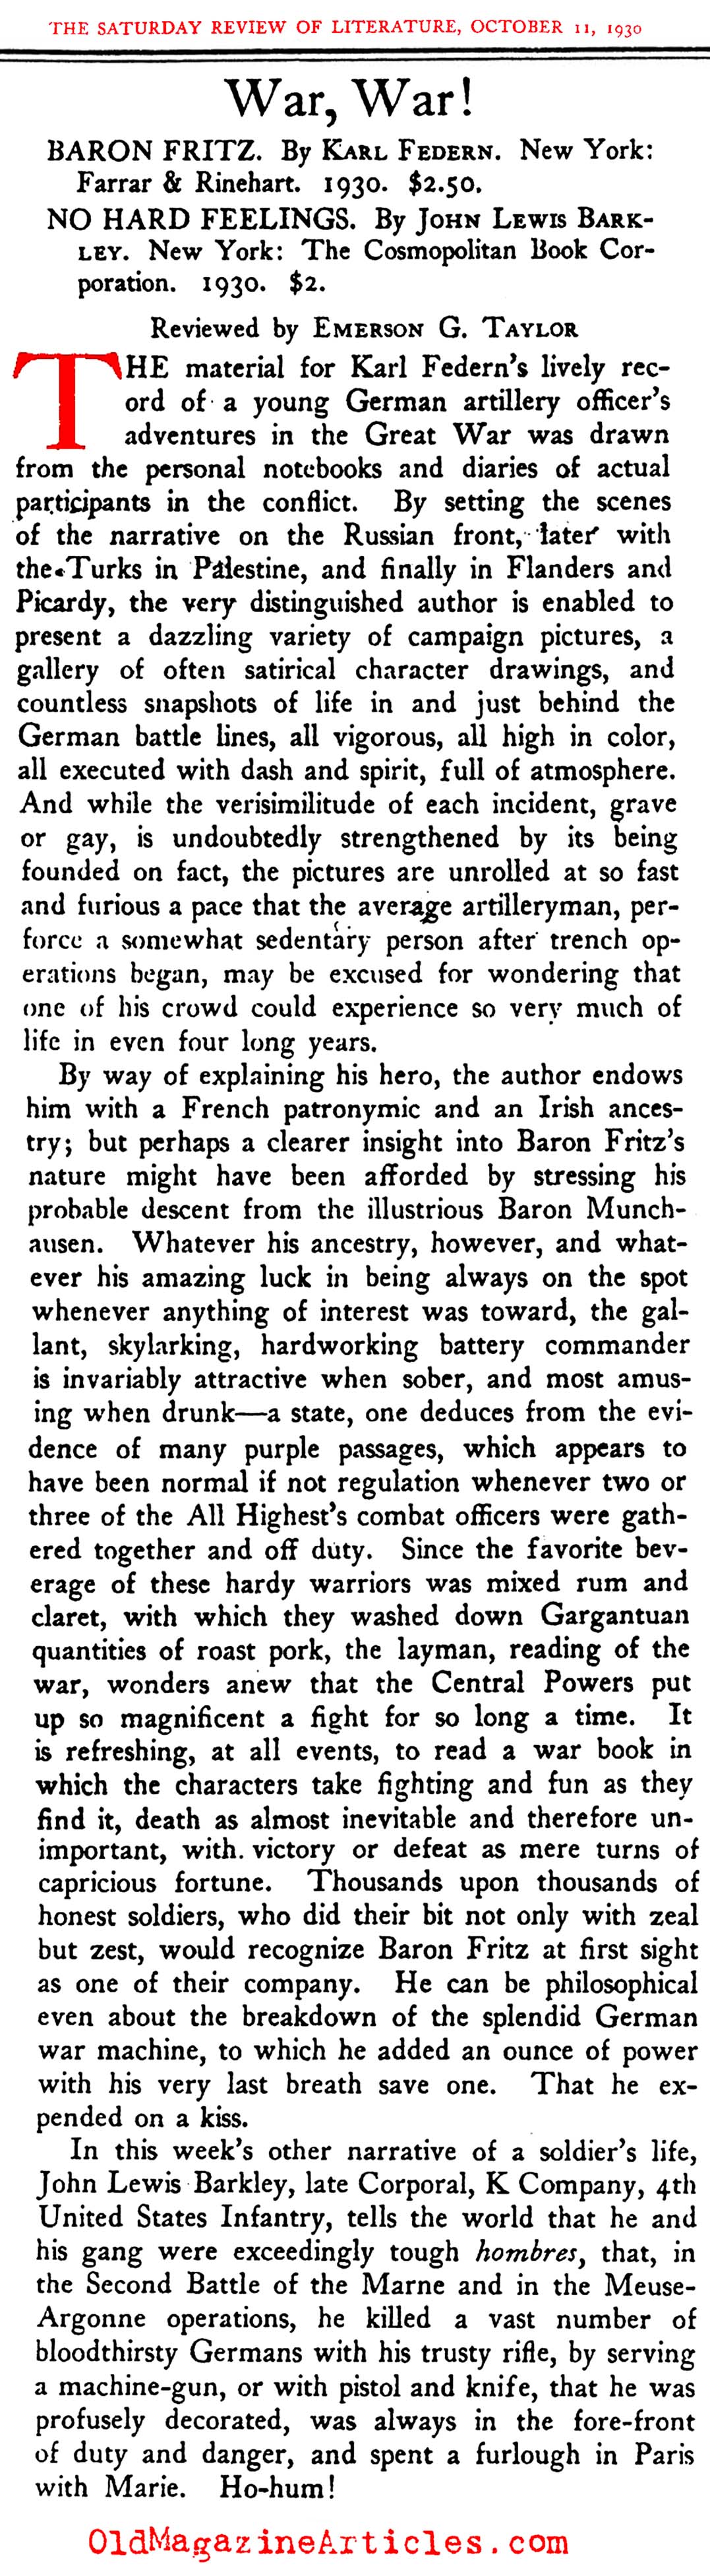 Baron Fritz & No Hard Feelings (Saturday Review of Literature, 1930)